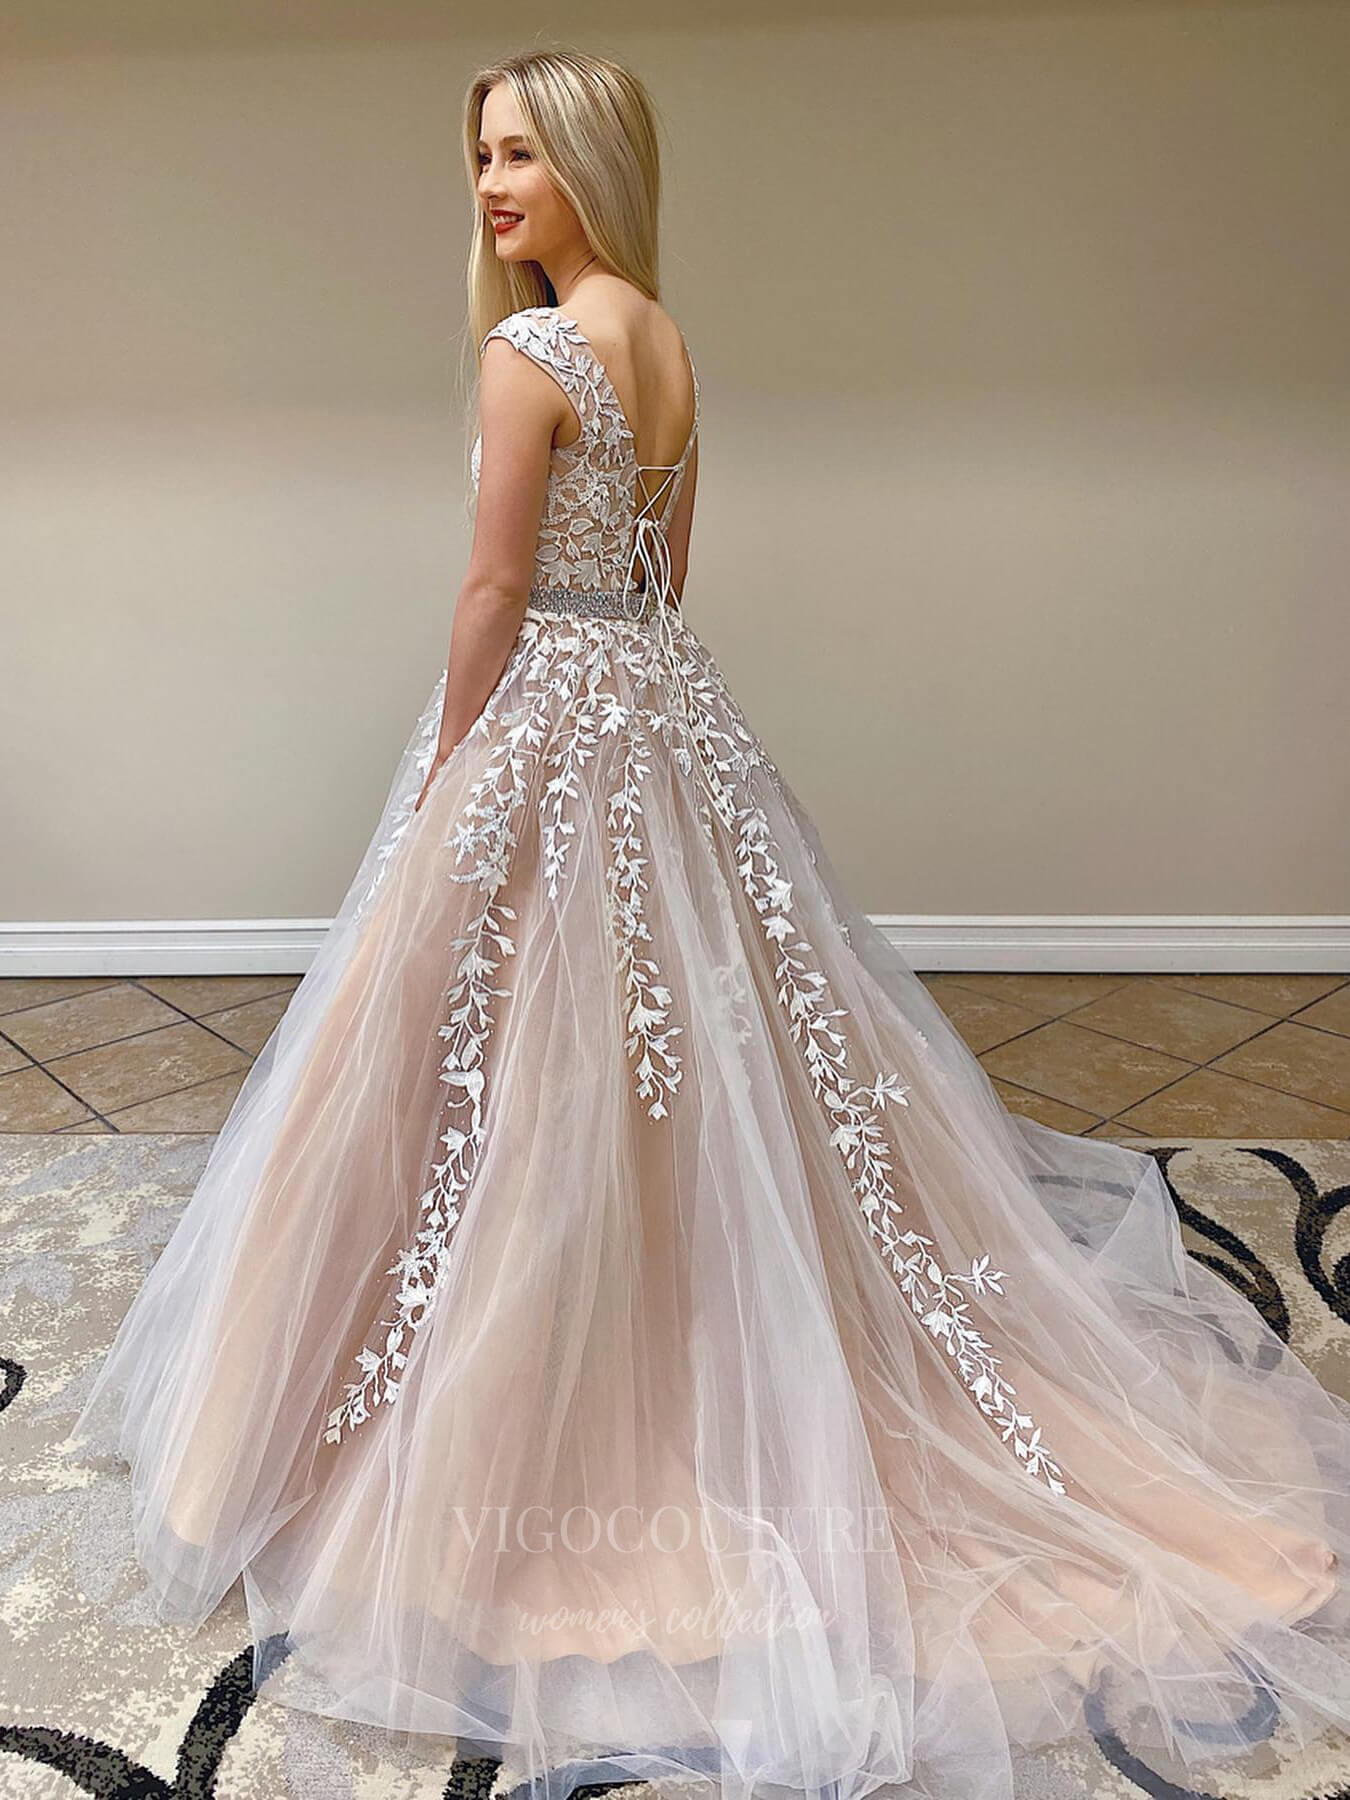 vigocouture-Khaki Lace Applique Prom Dresses A-Line Evening Dress 20928-Prom Dresses-vigocouture-